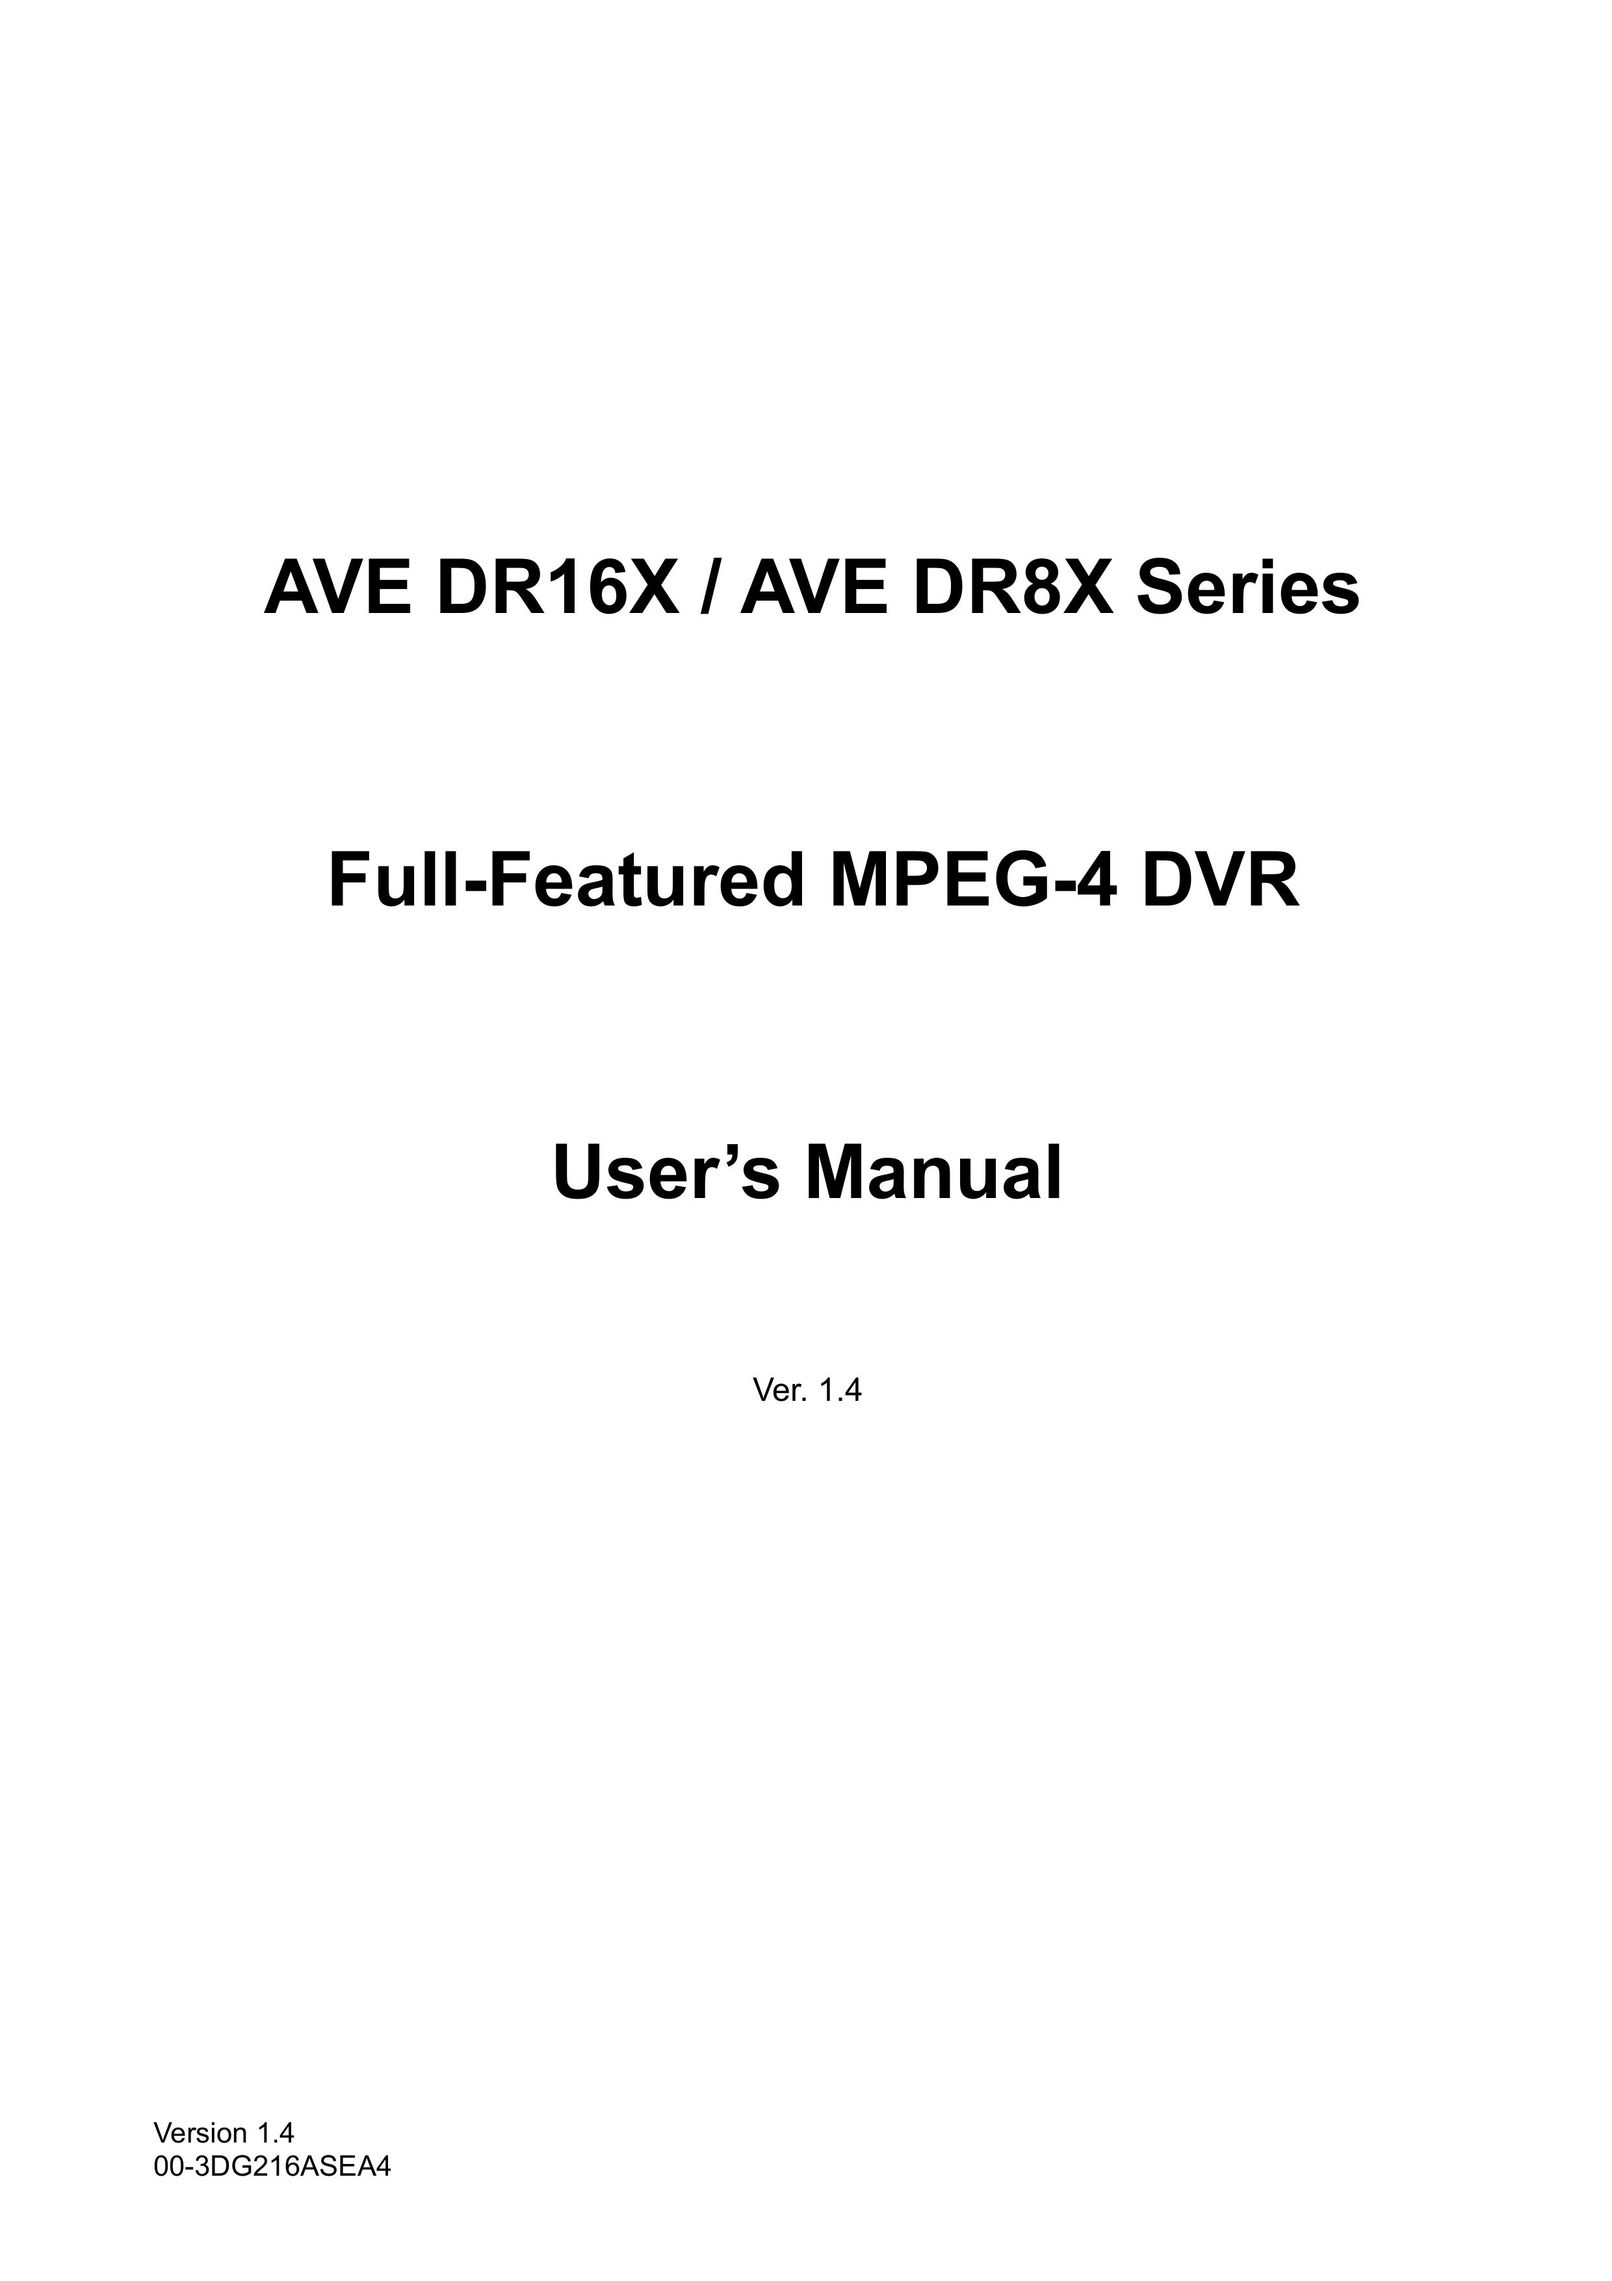 AVE AVE DR8X DVR User Manual